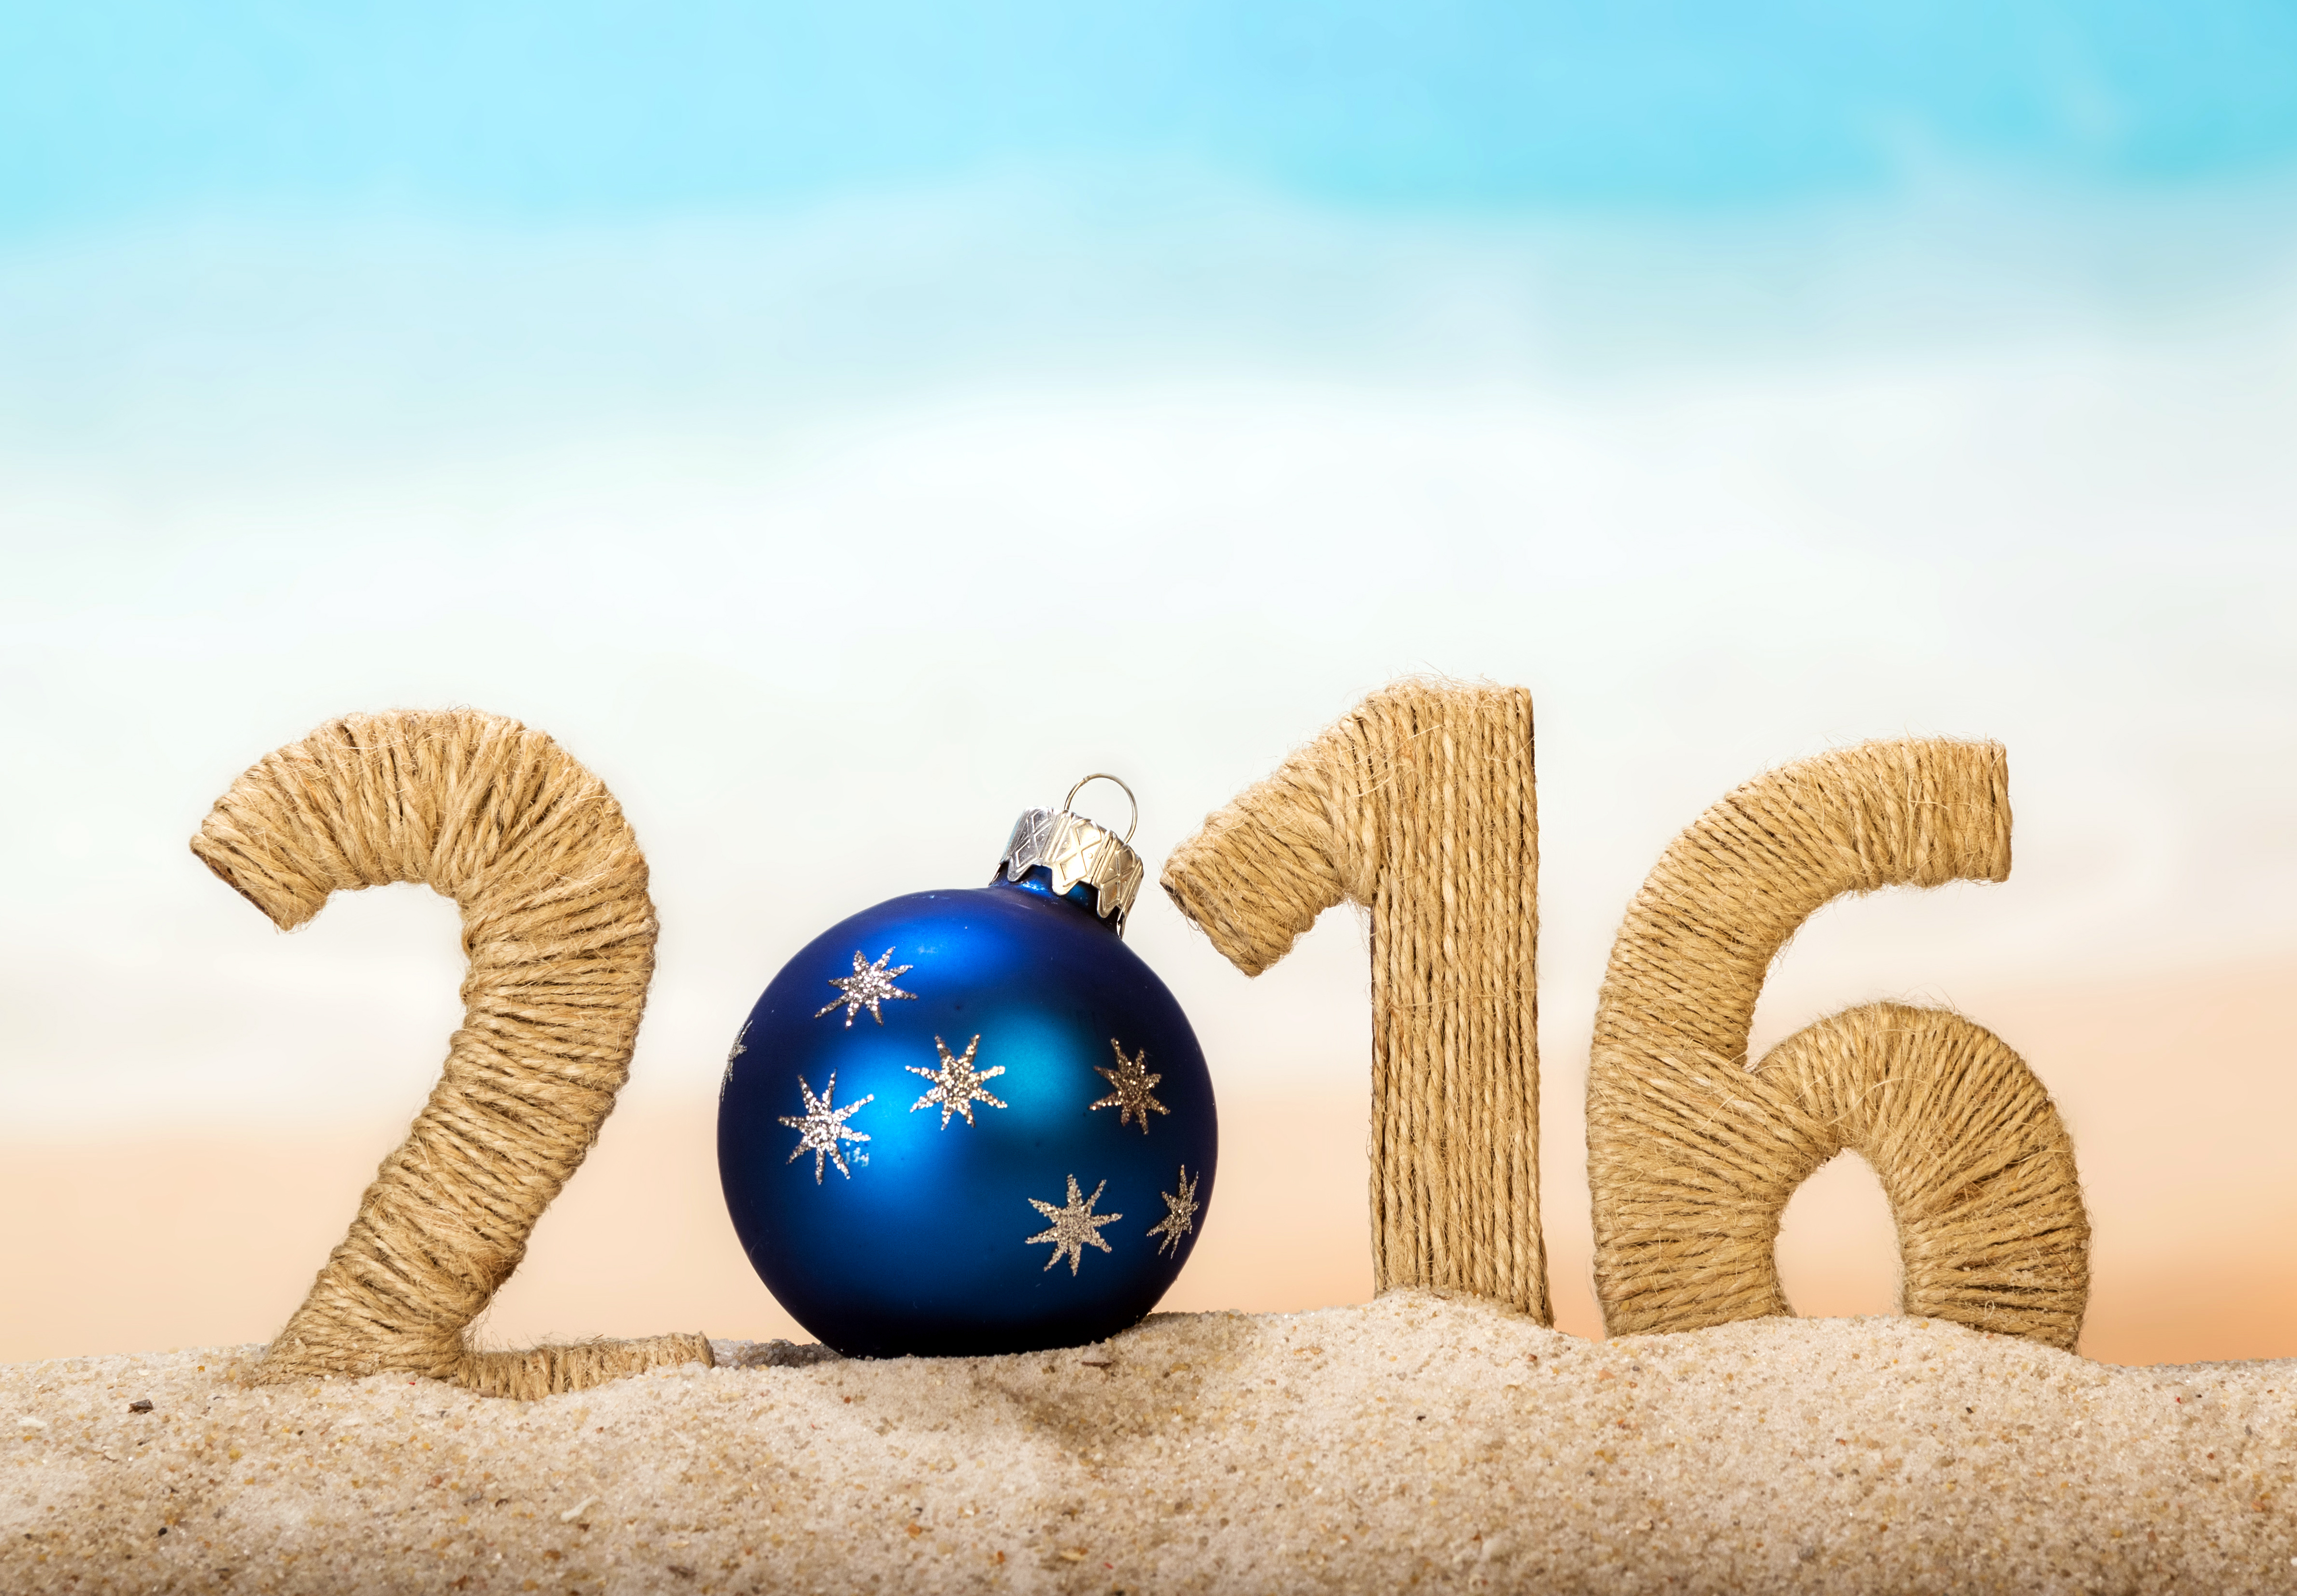 2016 новый год праздник new year holiday без смс